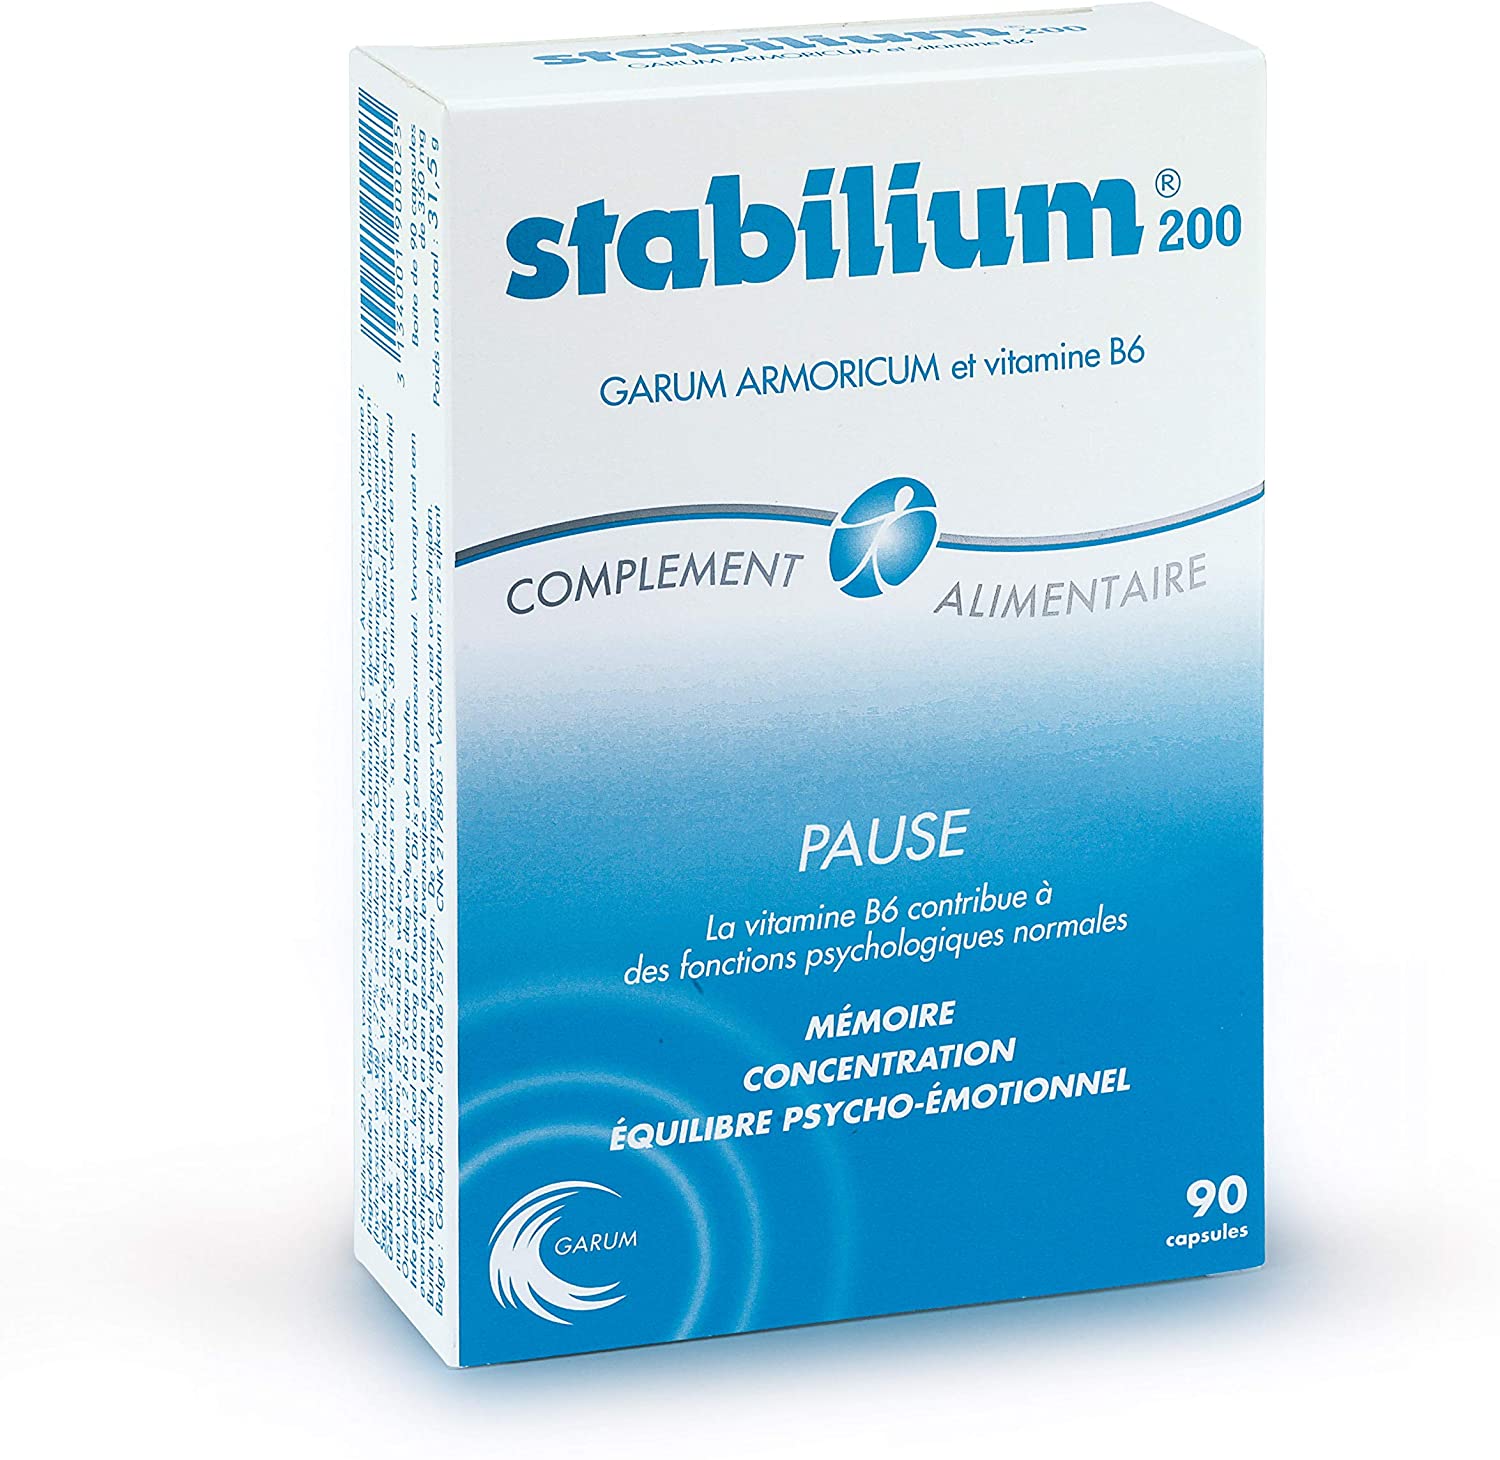 Stabilium 200 - Stress, burn-out (fatigue professionnelle) - 90 capsules